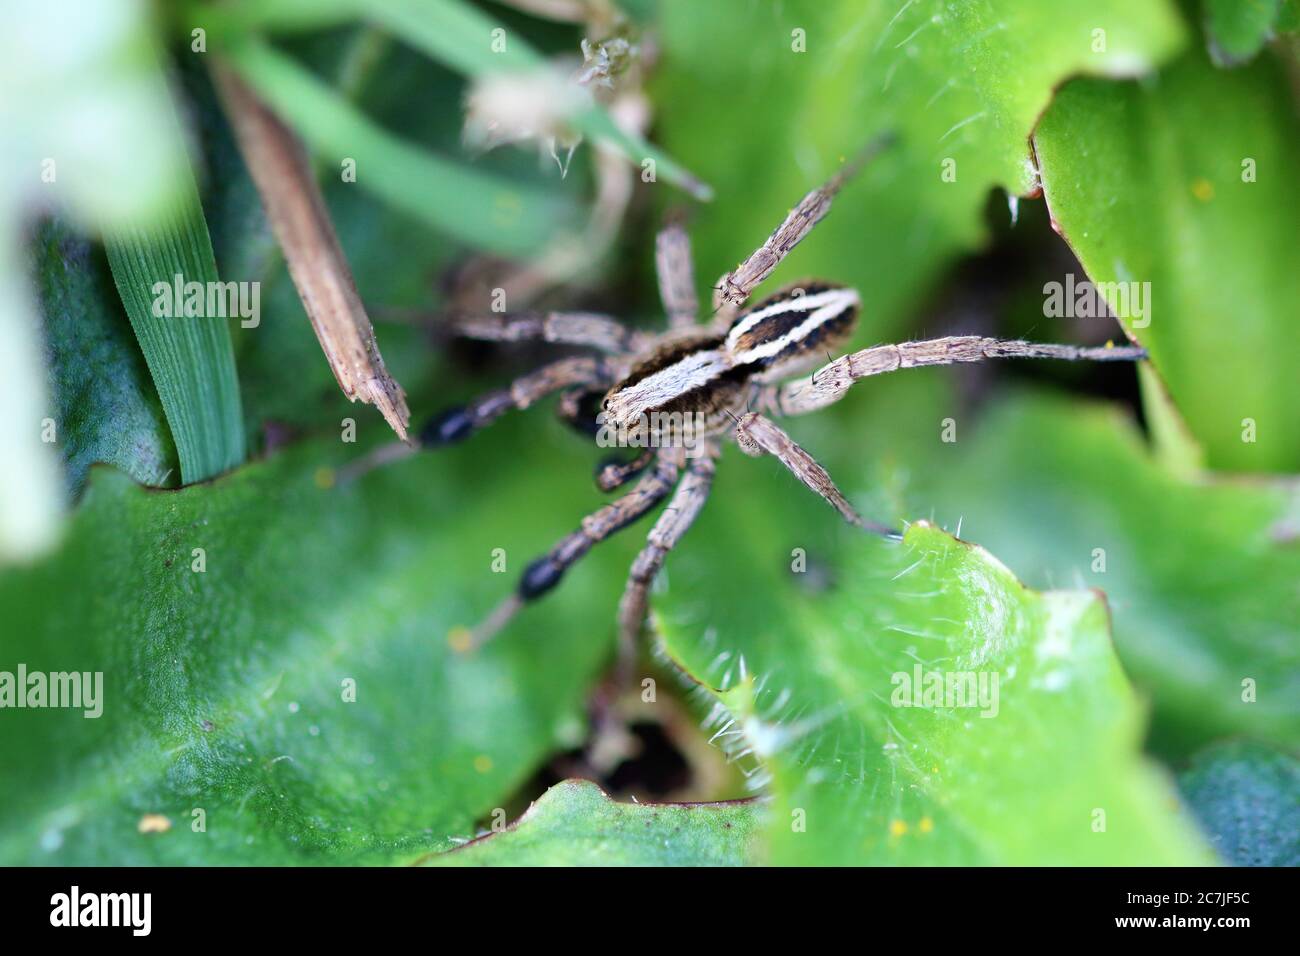 Alopecosa cuneata (spider) Stock Photo